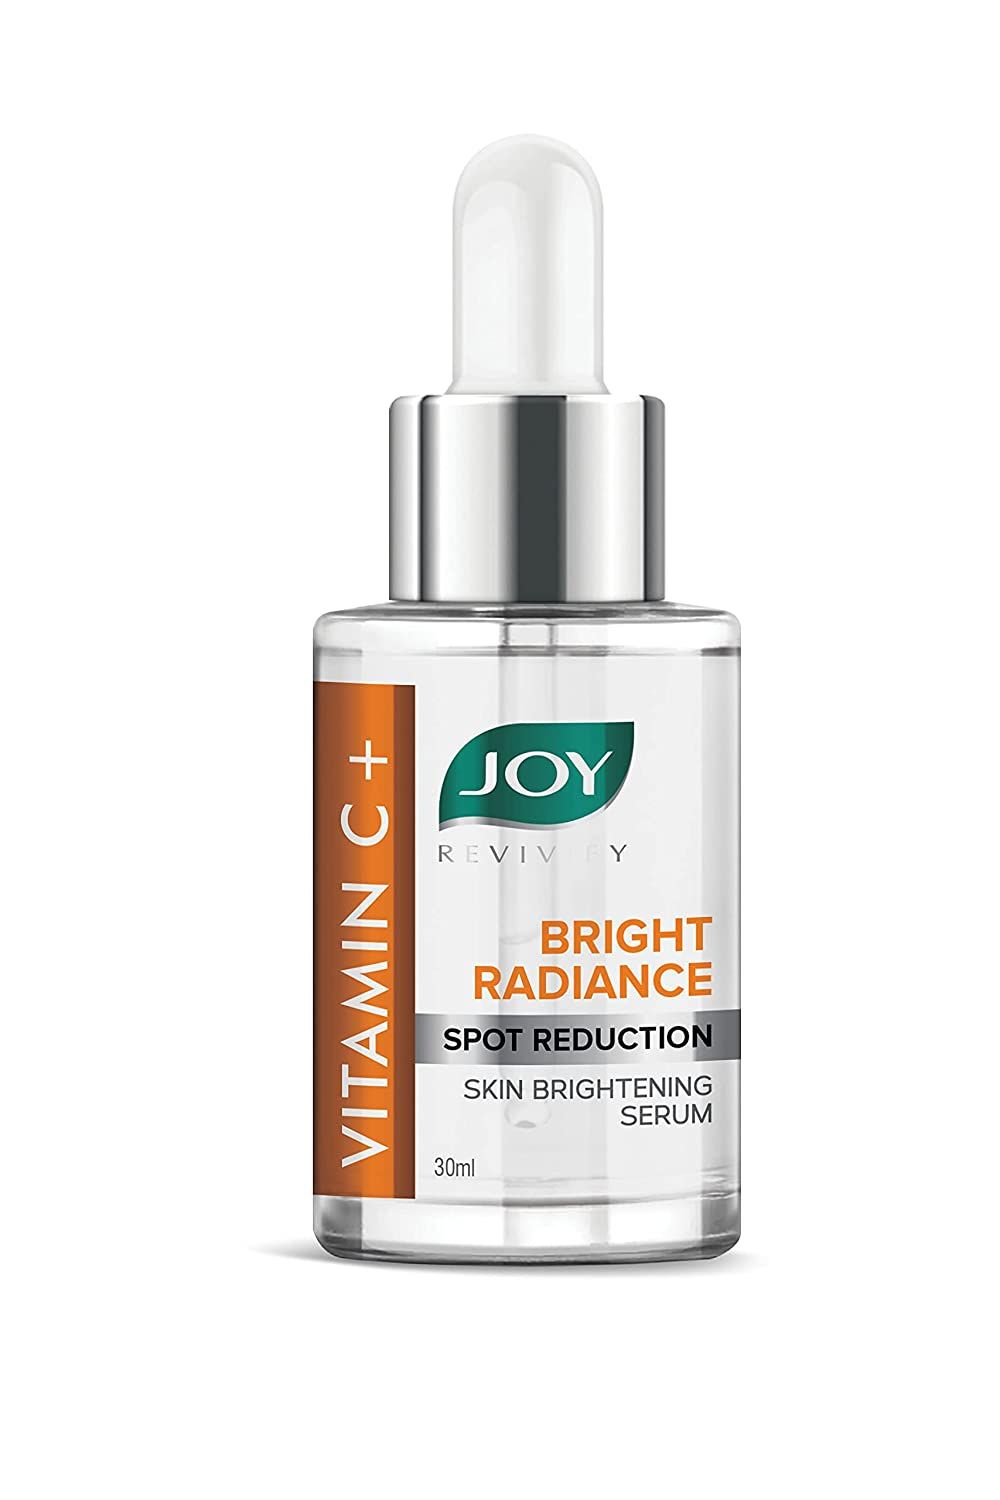 Joy Revivify Vitamin C + Bright Radiance Spot Reduction Skin Brightening Serum